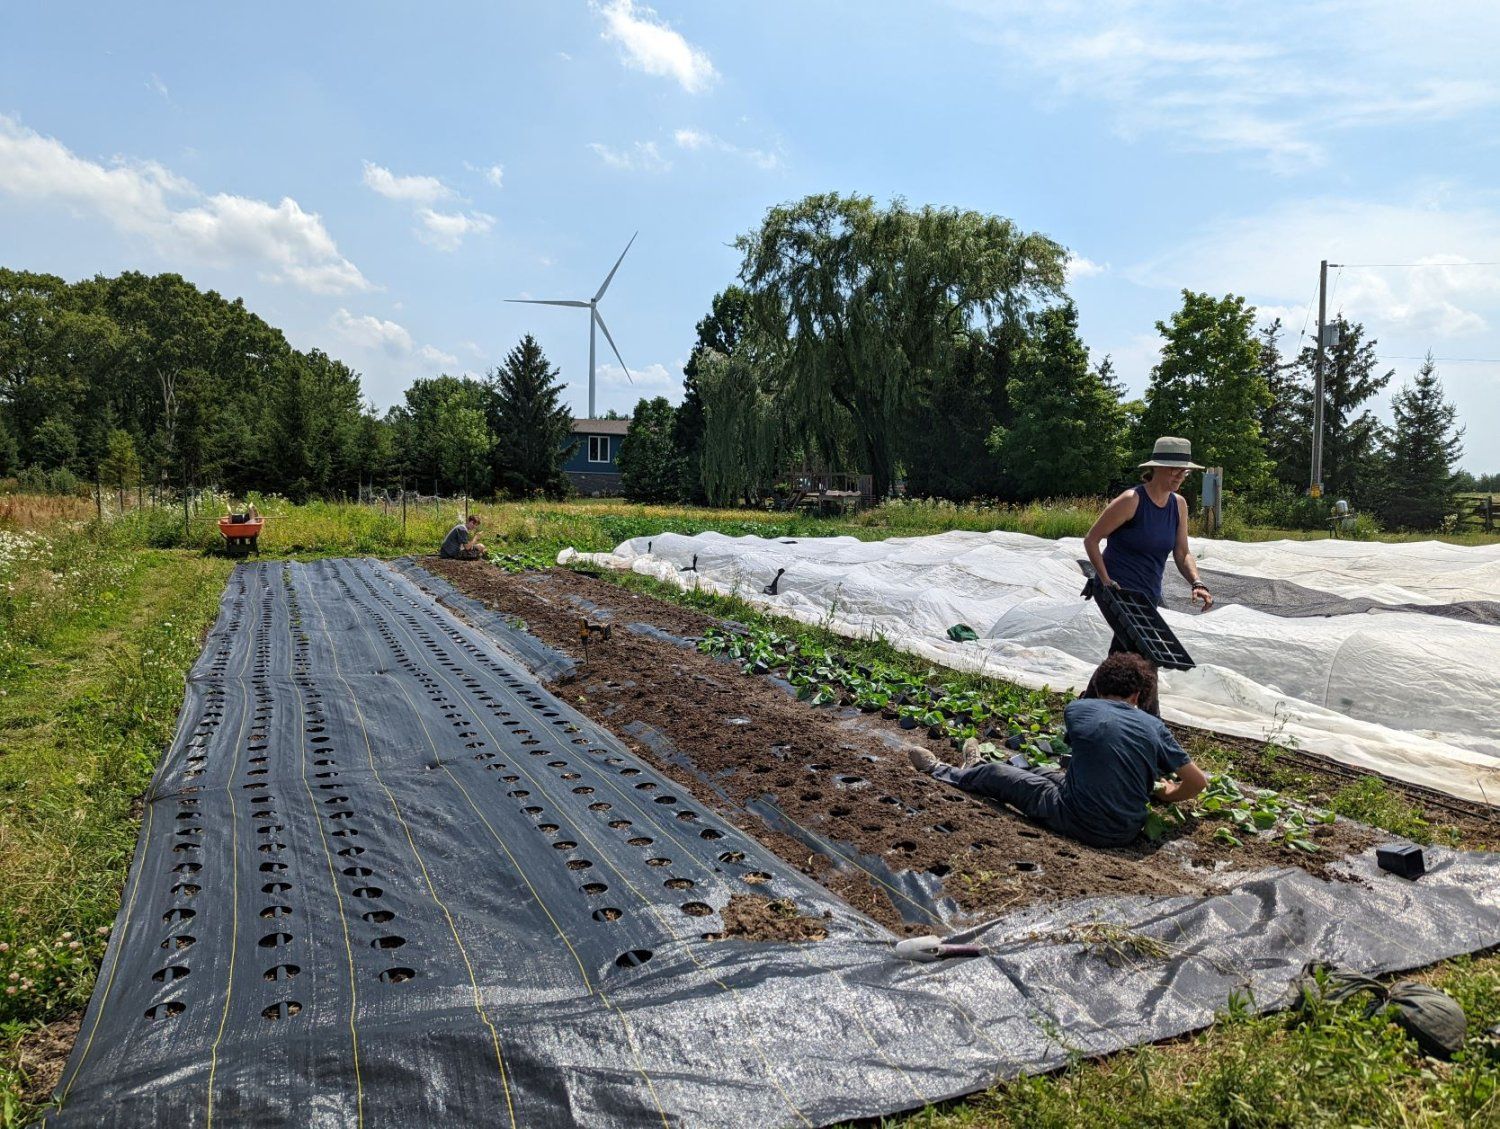 Next Happening: 2022 Farm Share Week 8 - Summer Picking + Fall Planting